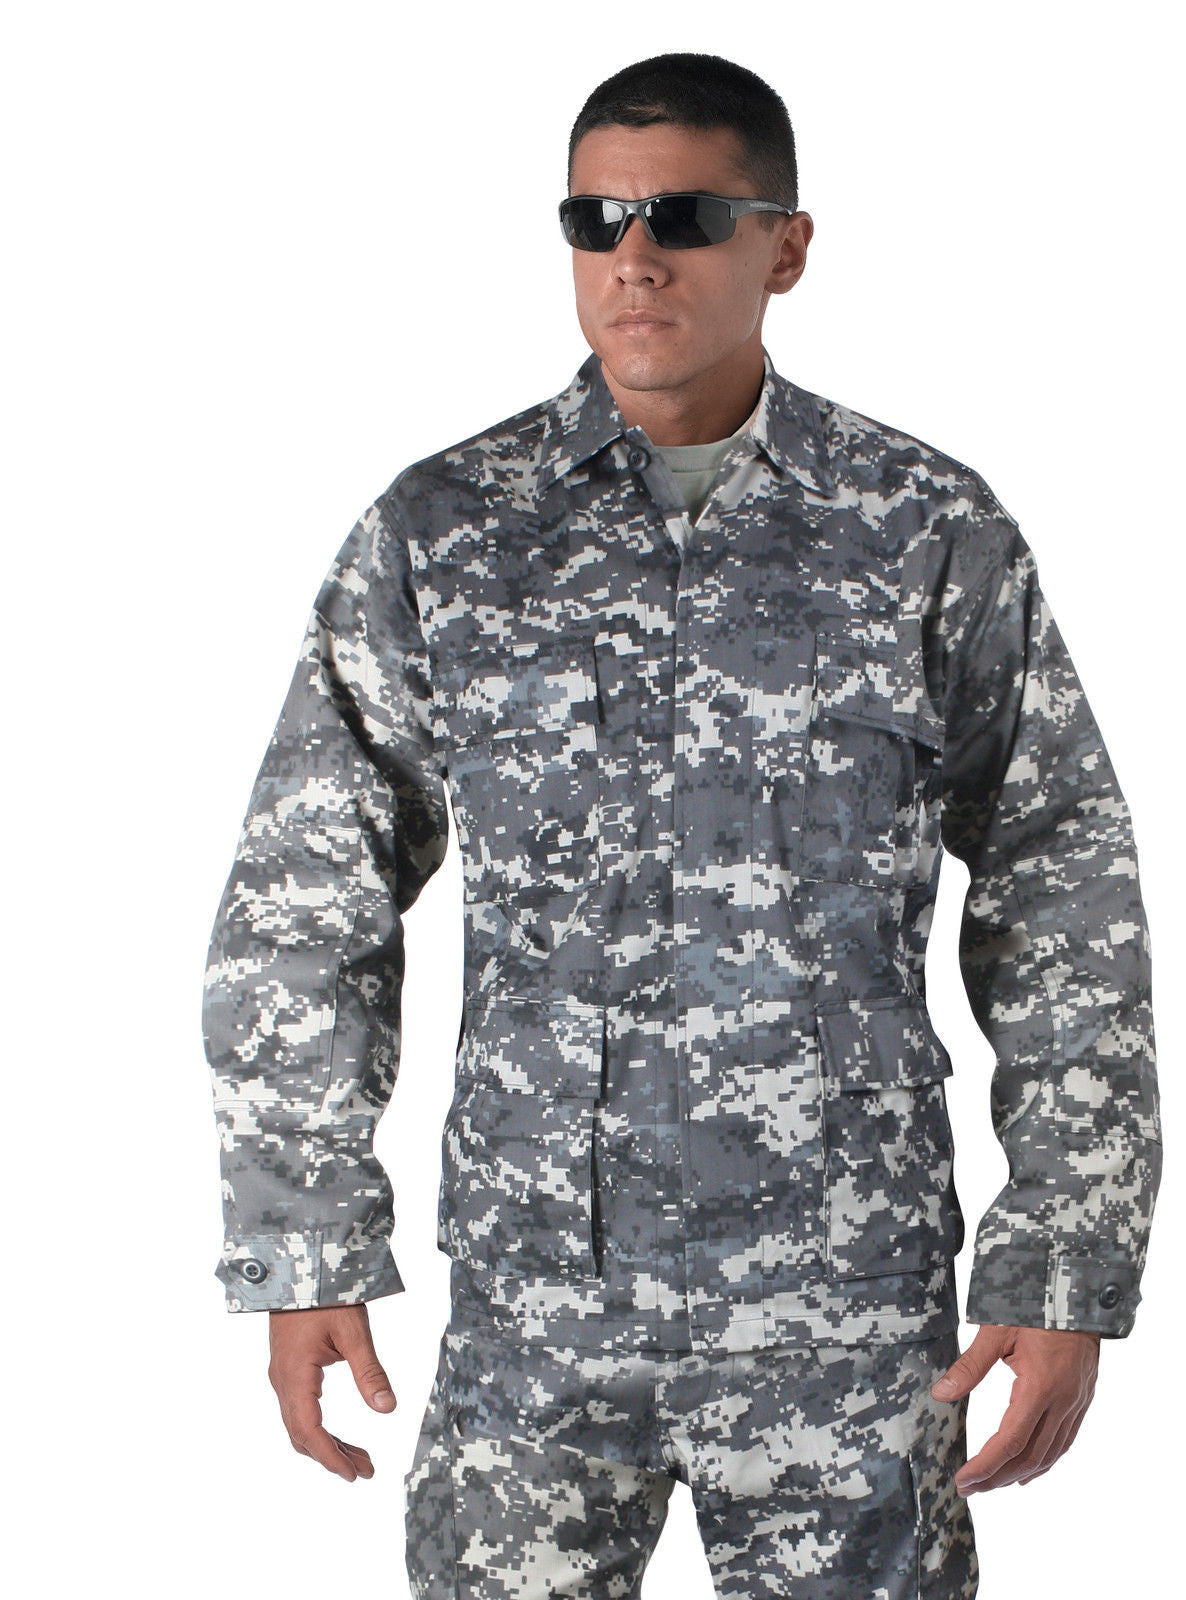 Армейский серый. Rothco Army Combat uniform Shirt ACU Digital Camo. Urban Digital Camo BDU. BDU цифровой камуфляж. Rothco BDU Military.